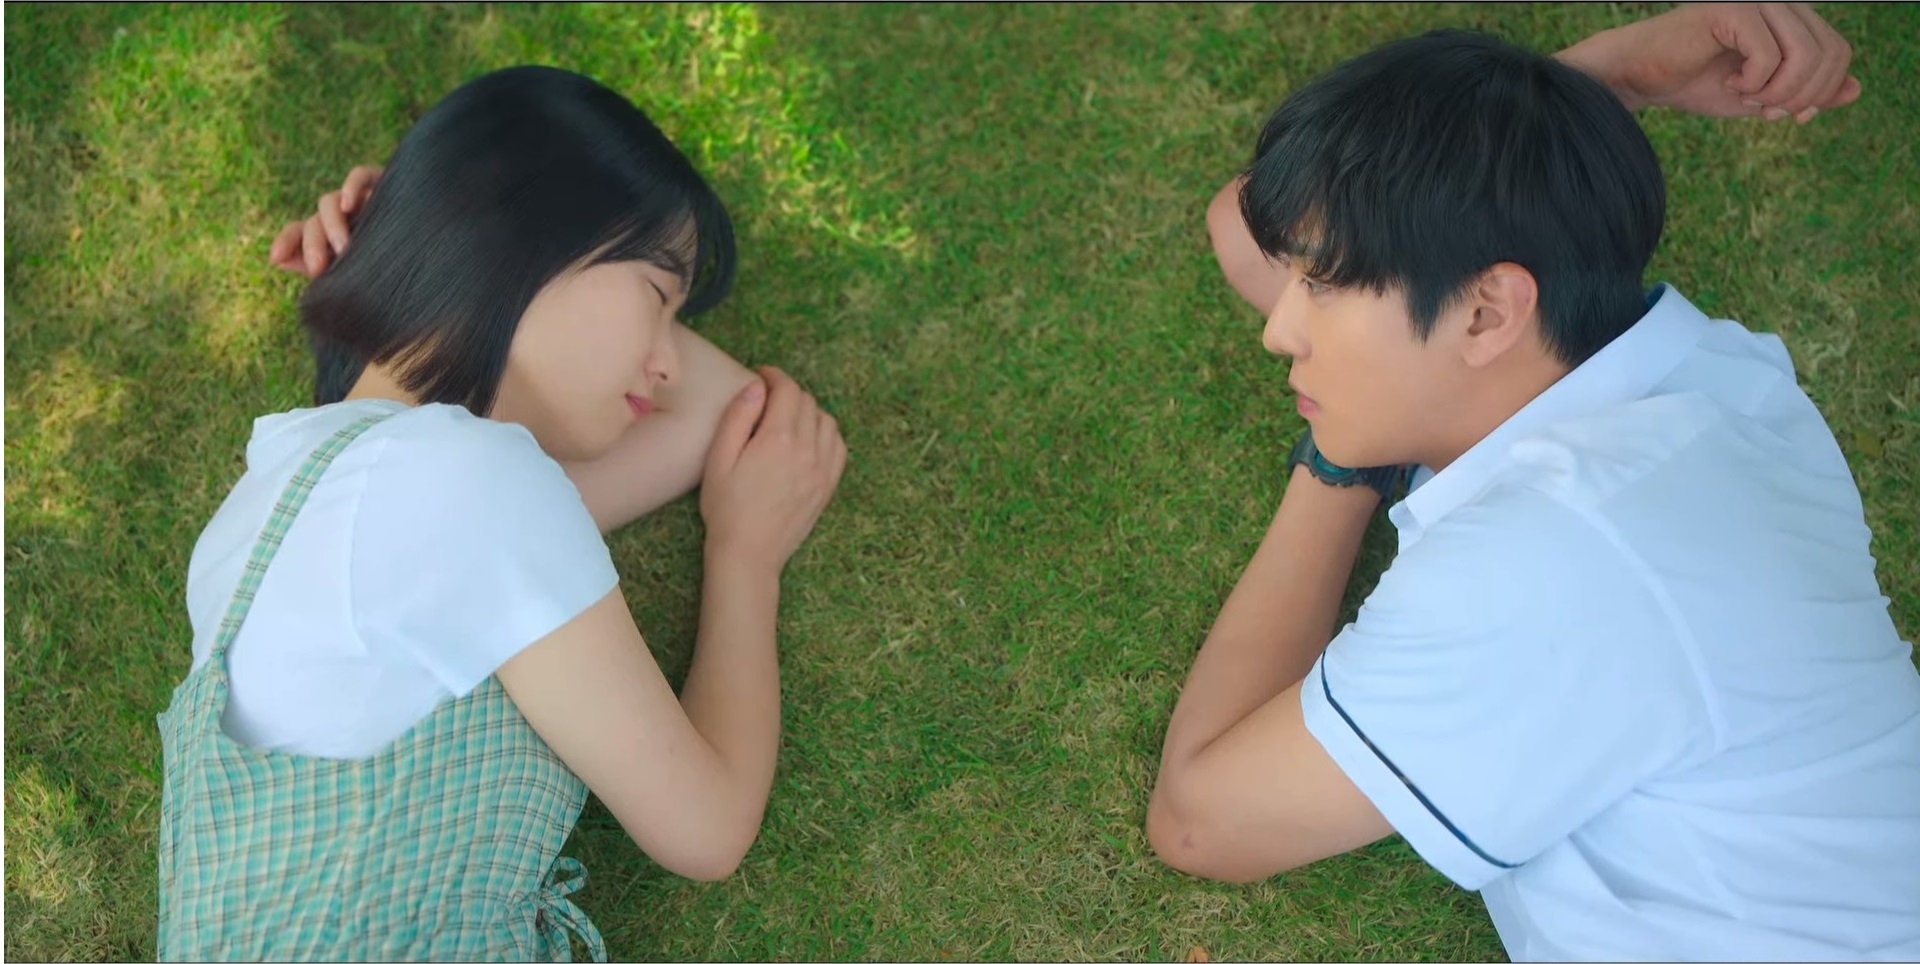 Drama Special Season 12: A Moment of Romance Drama Review